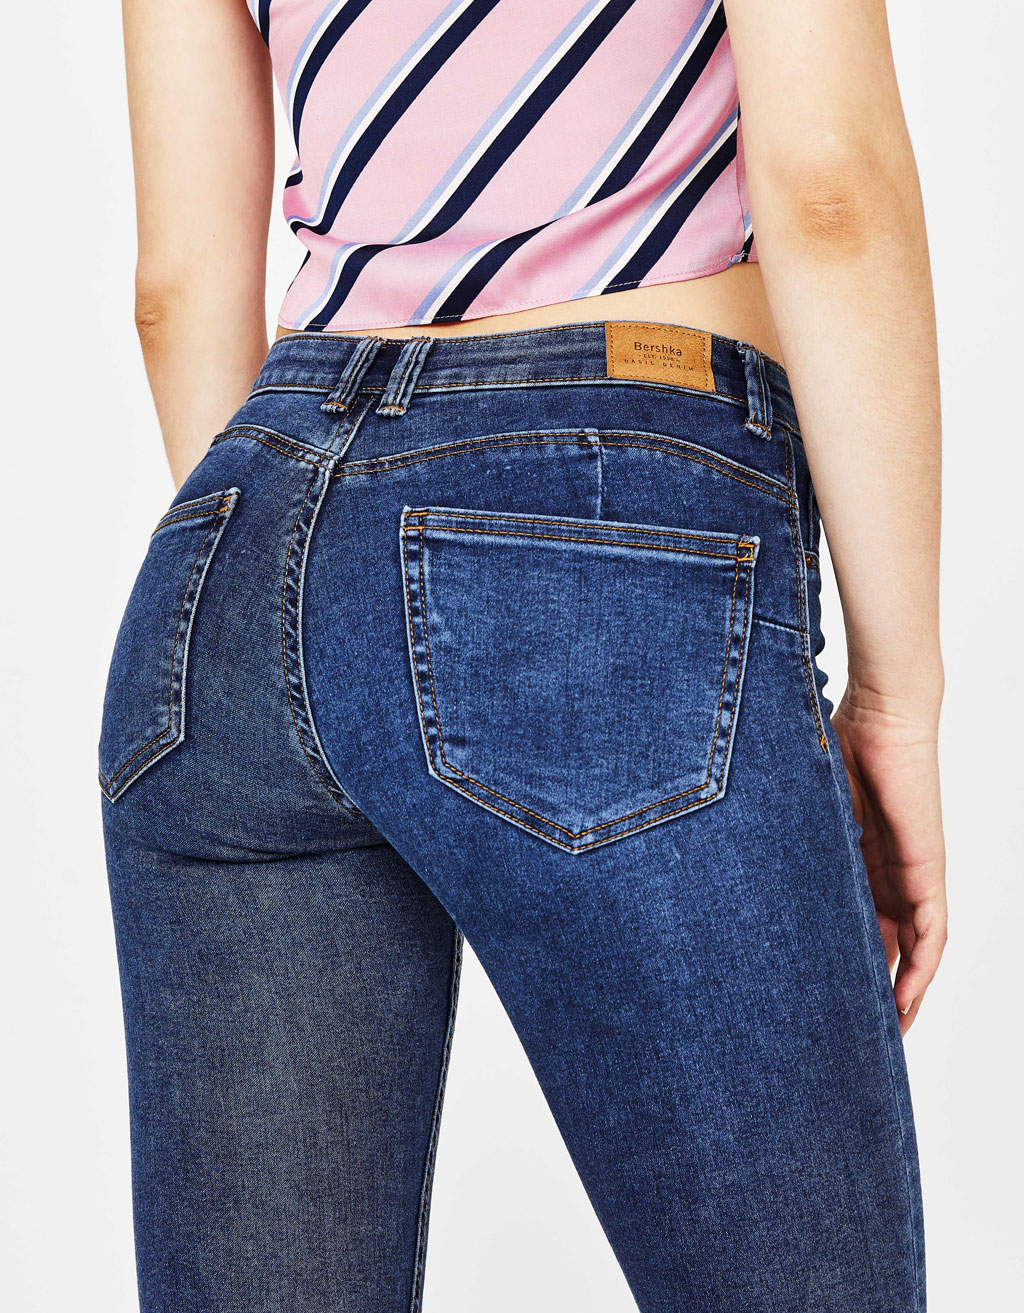 Low-rise push-up stretch jeans - Jeans - Bershka United Kingdom